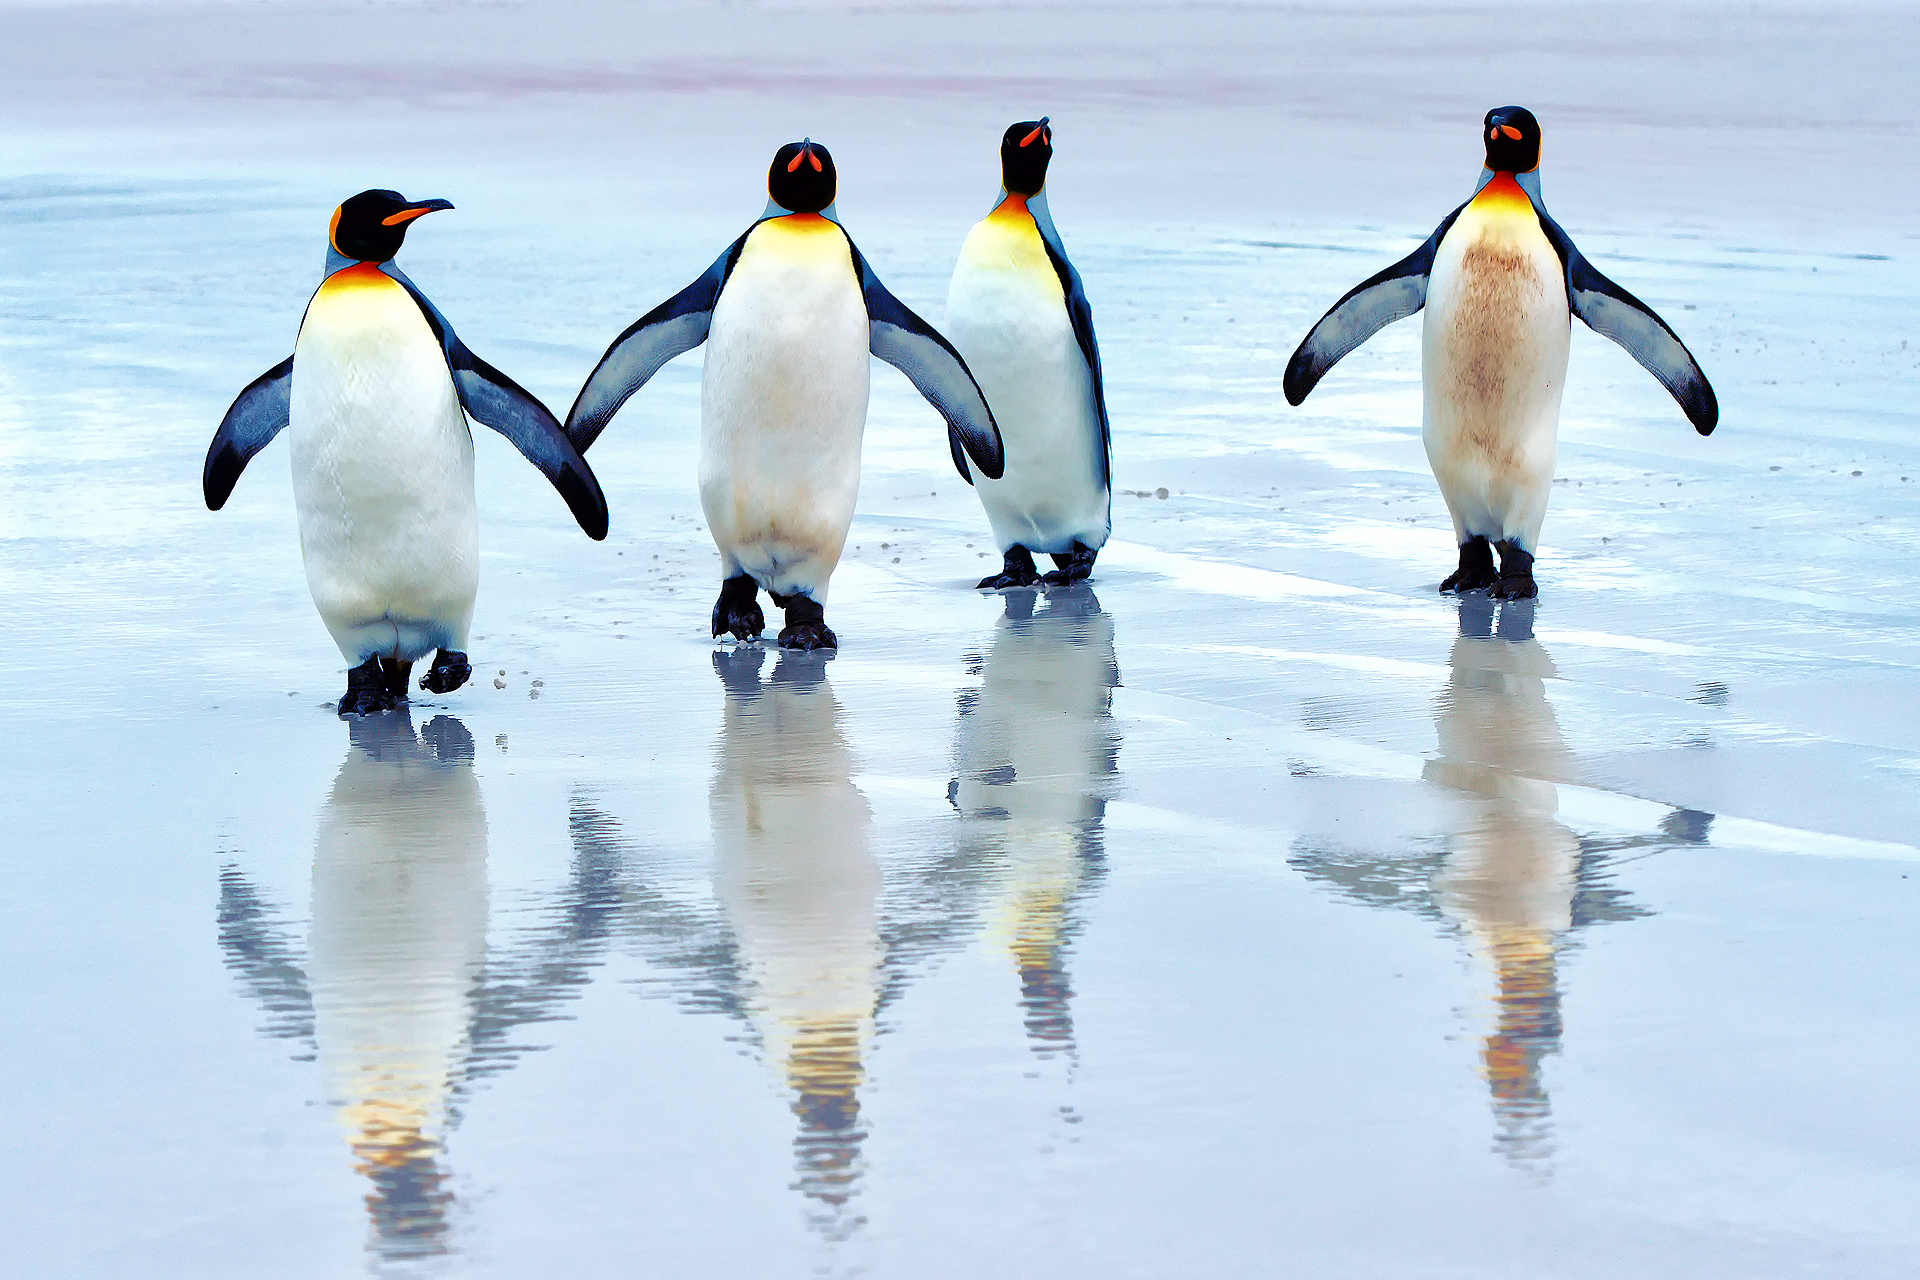 Artistic penguin wallpaper, High-resolution image, Eye-catching visuals, Stunning creation, 1920x1280 HD Desktop